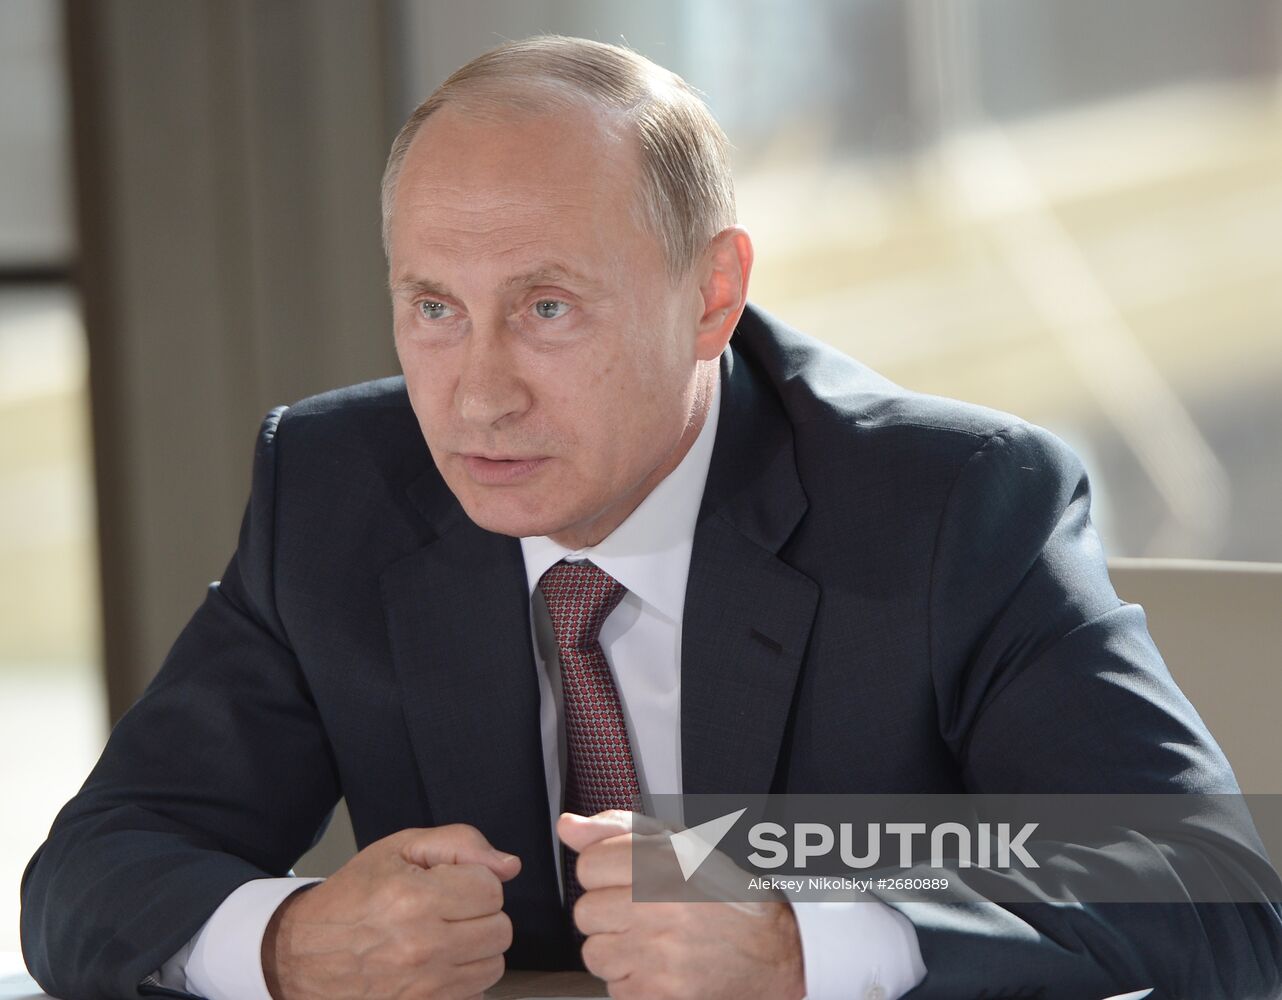 Russian President Vladimir Putin's meeting with representatives of national public associations of Crimea